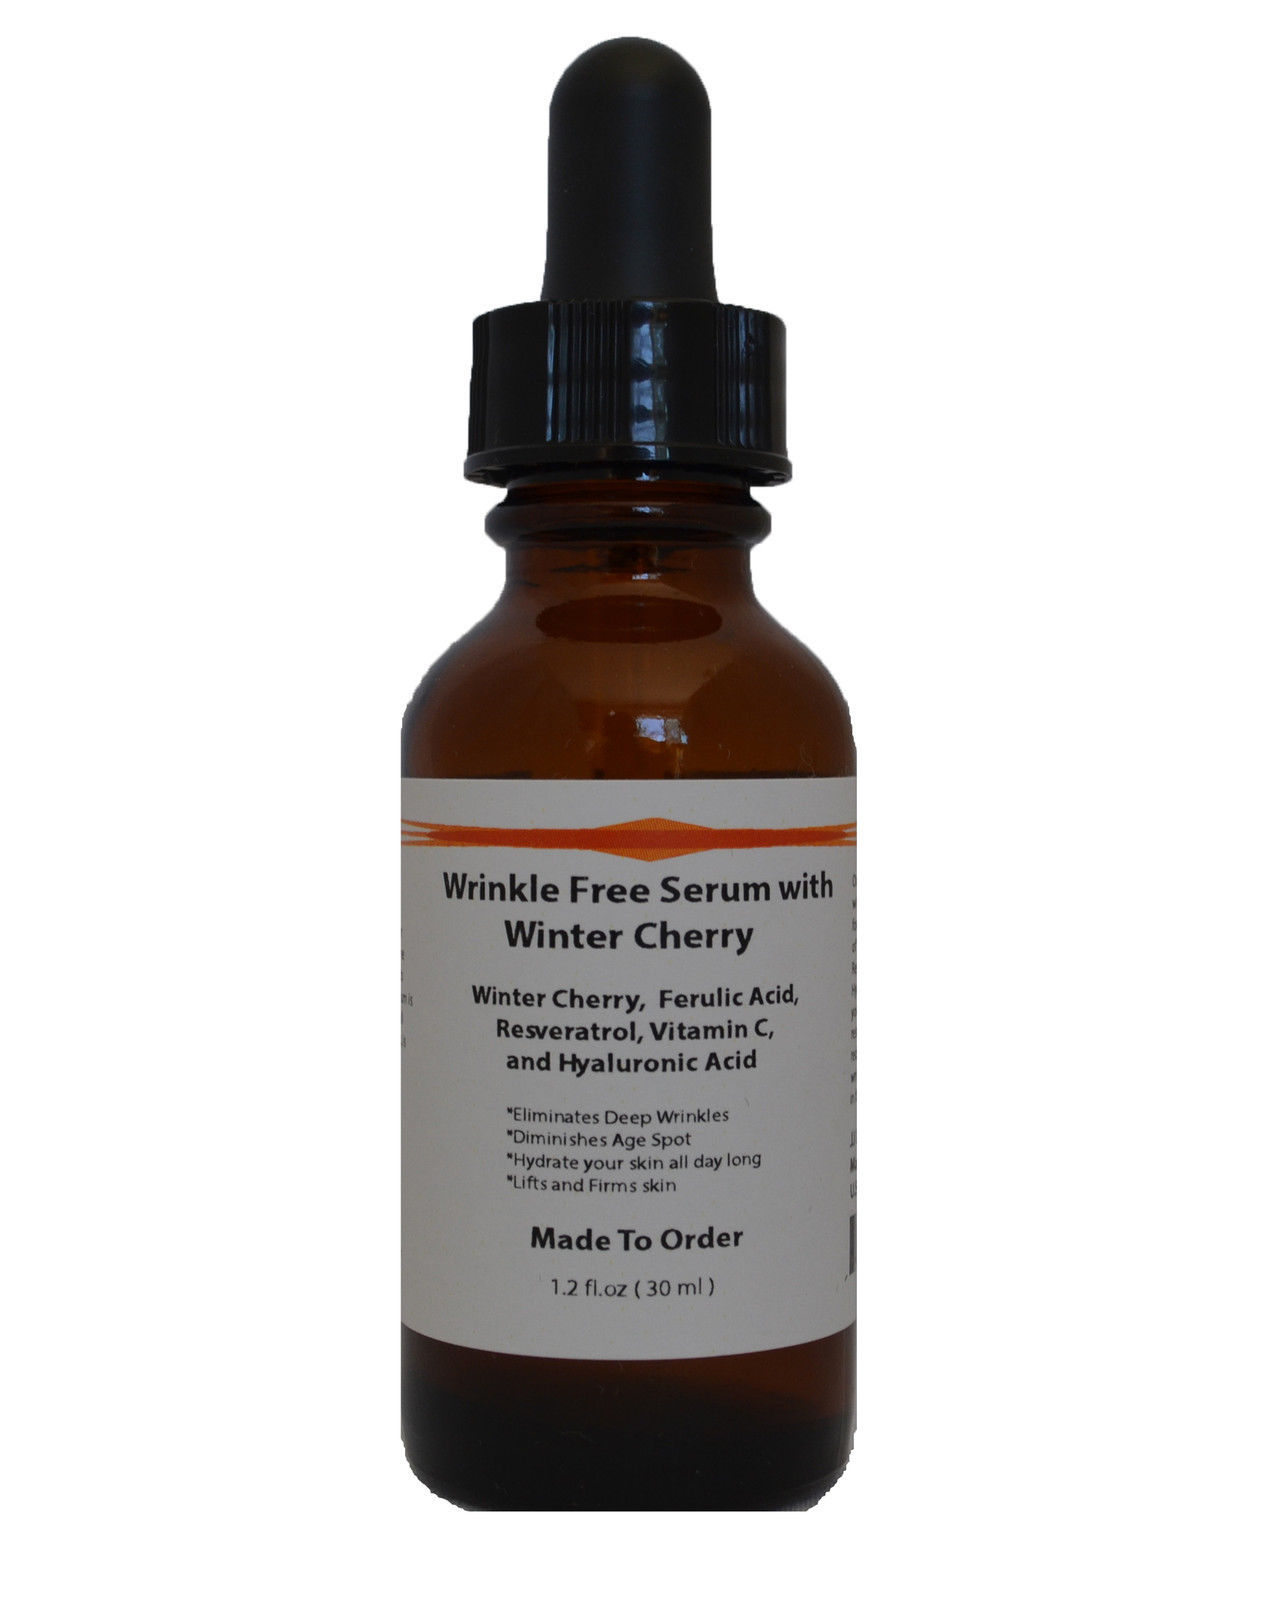 Wrinkle Free Serum with Winter Cherry, Ferulic Acid, Resveratrol, Vitamin C & HA - $16.78 - $27.67